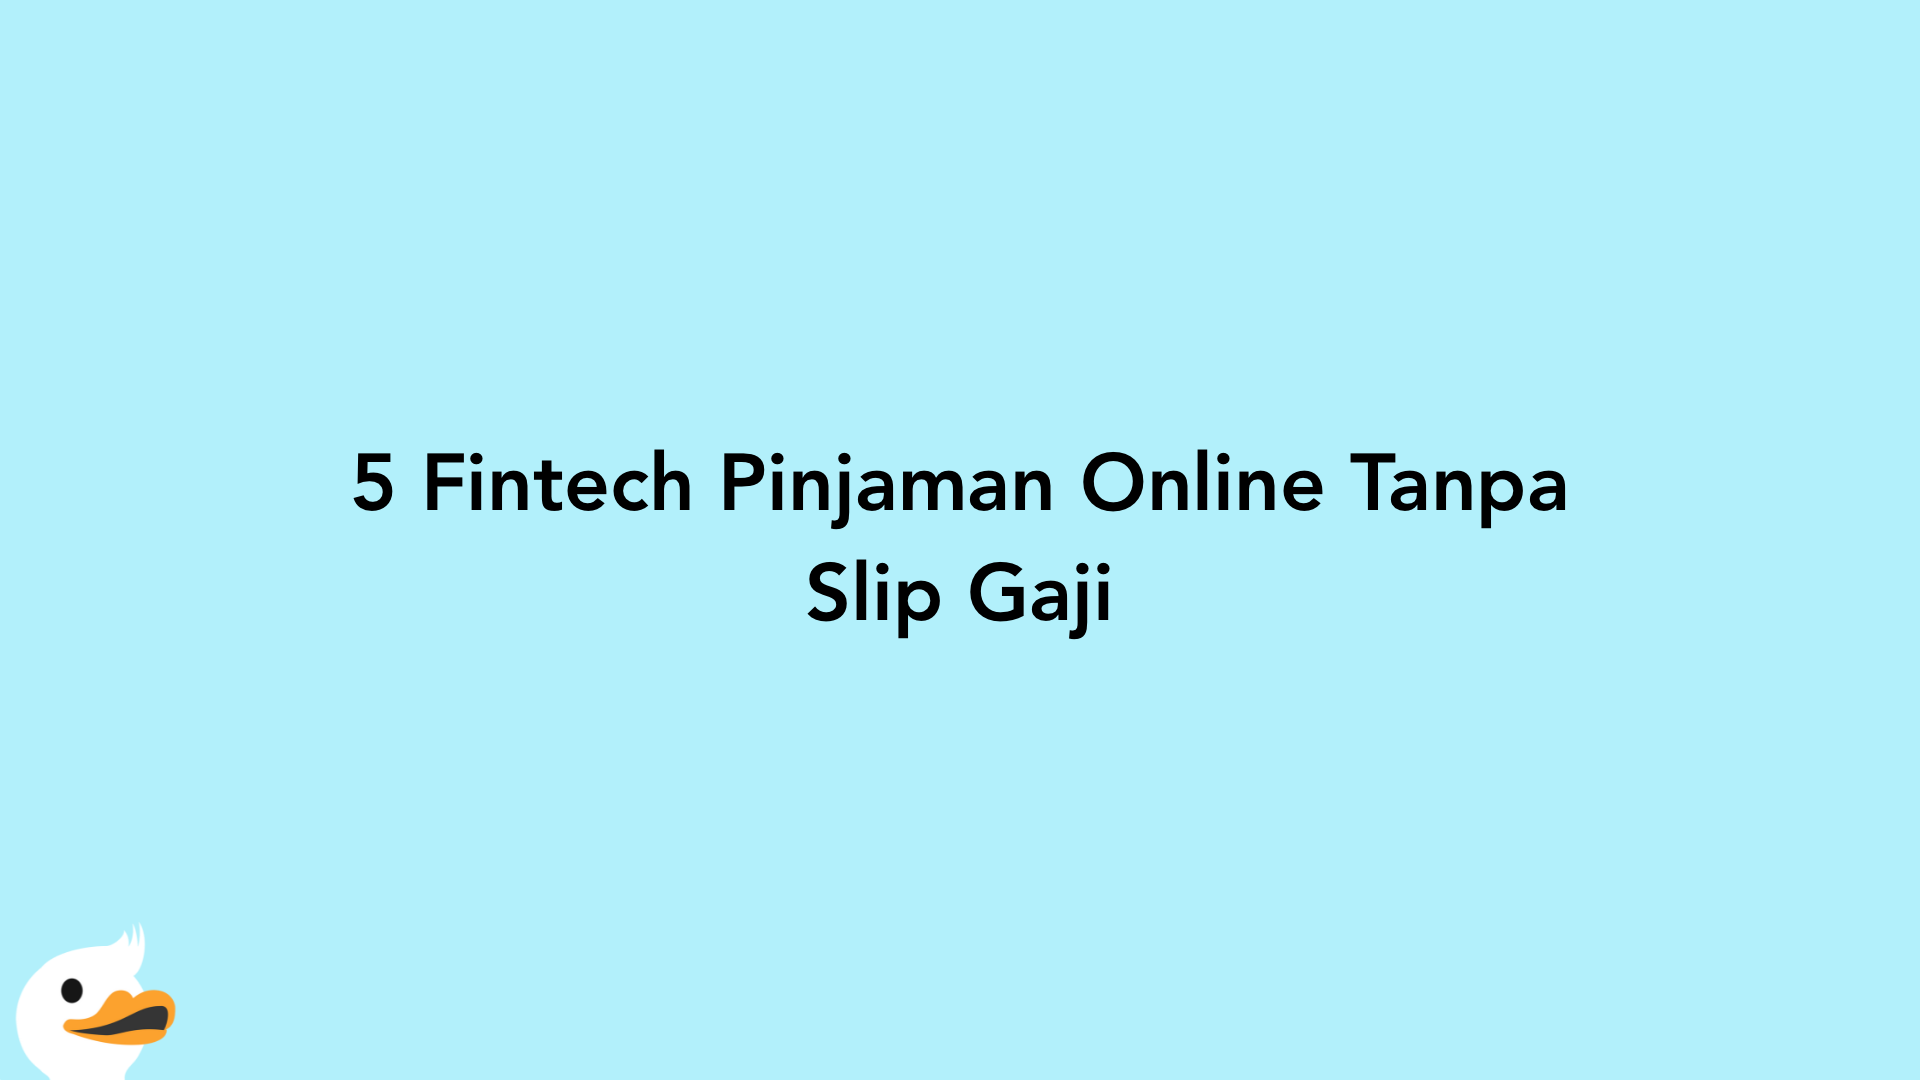 5 Fintech Pinjaman Online Tanpa Slip Gaji